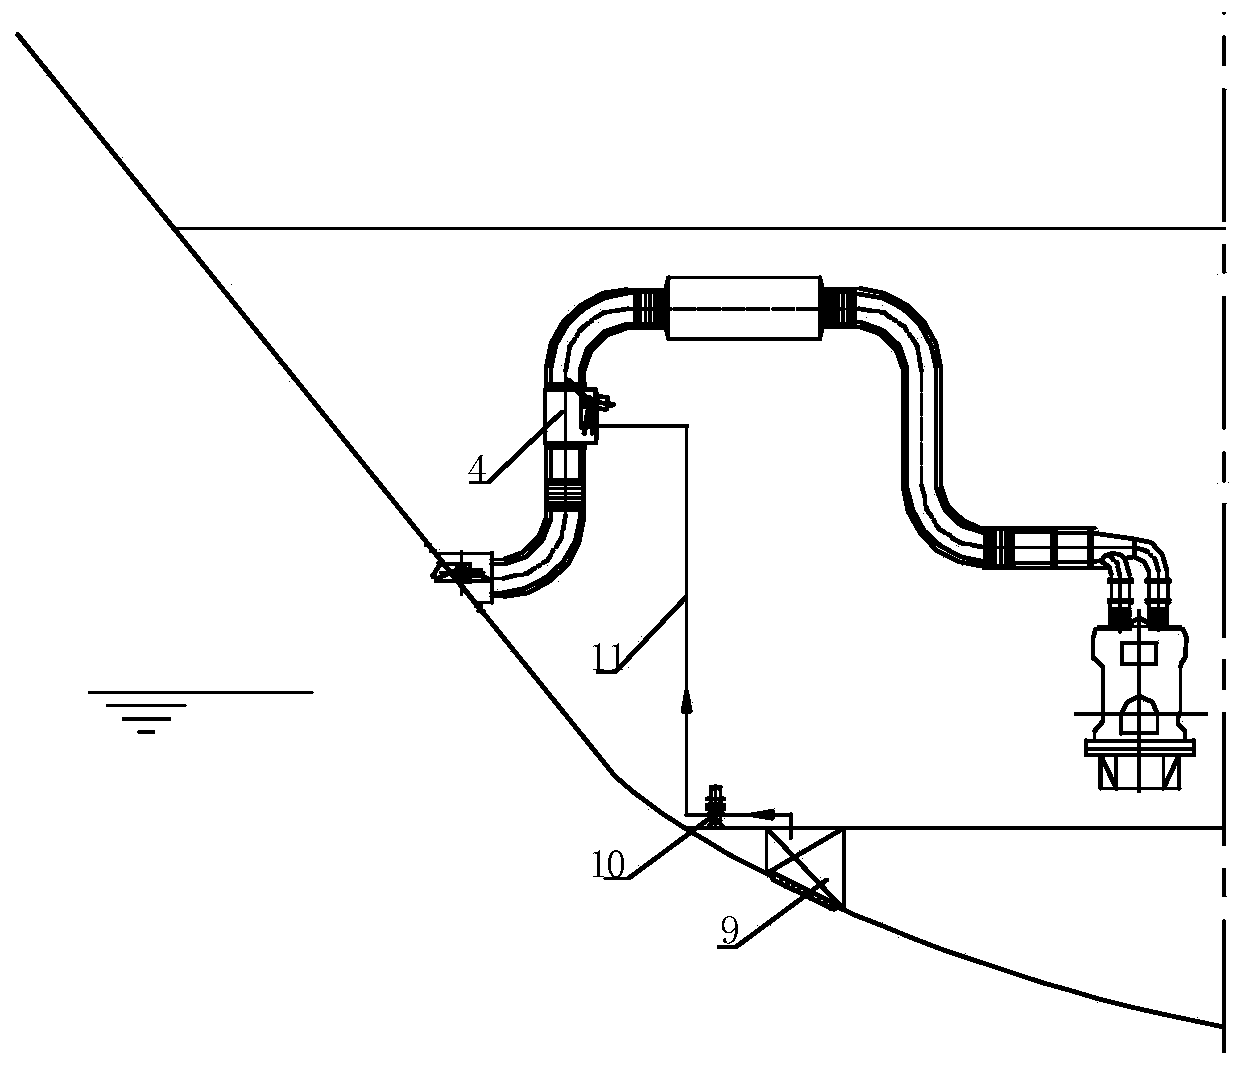 Marine exhaust pipeline system